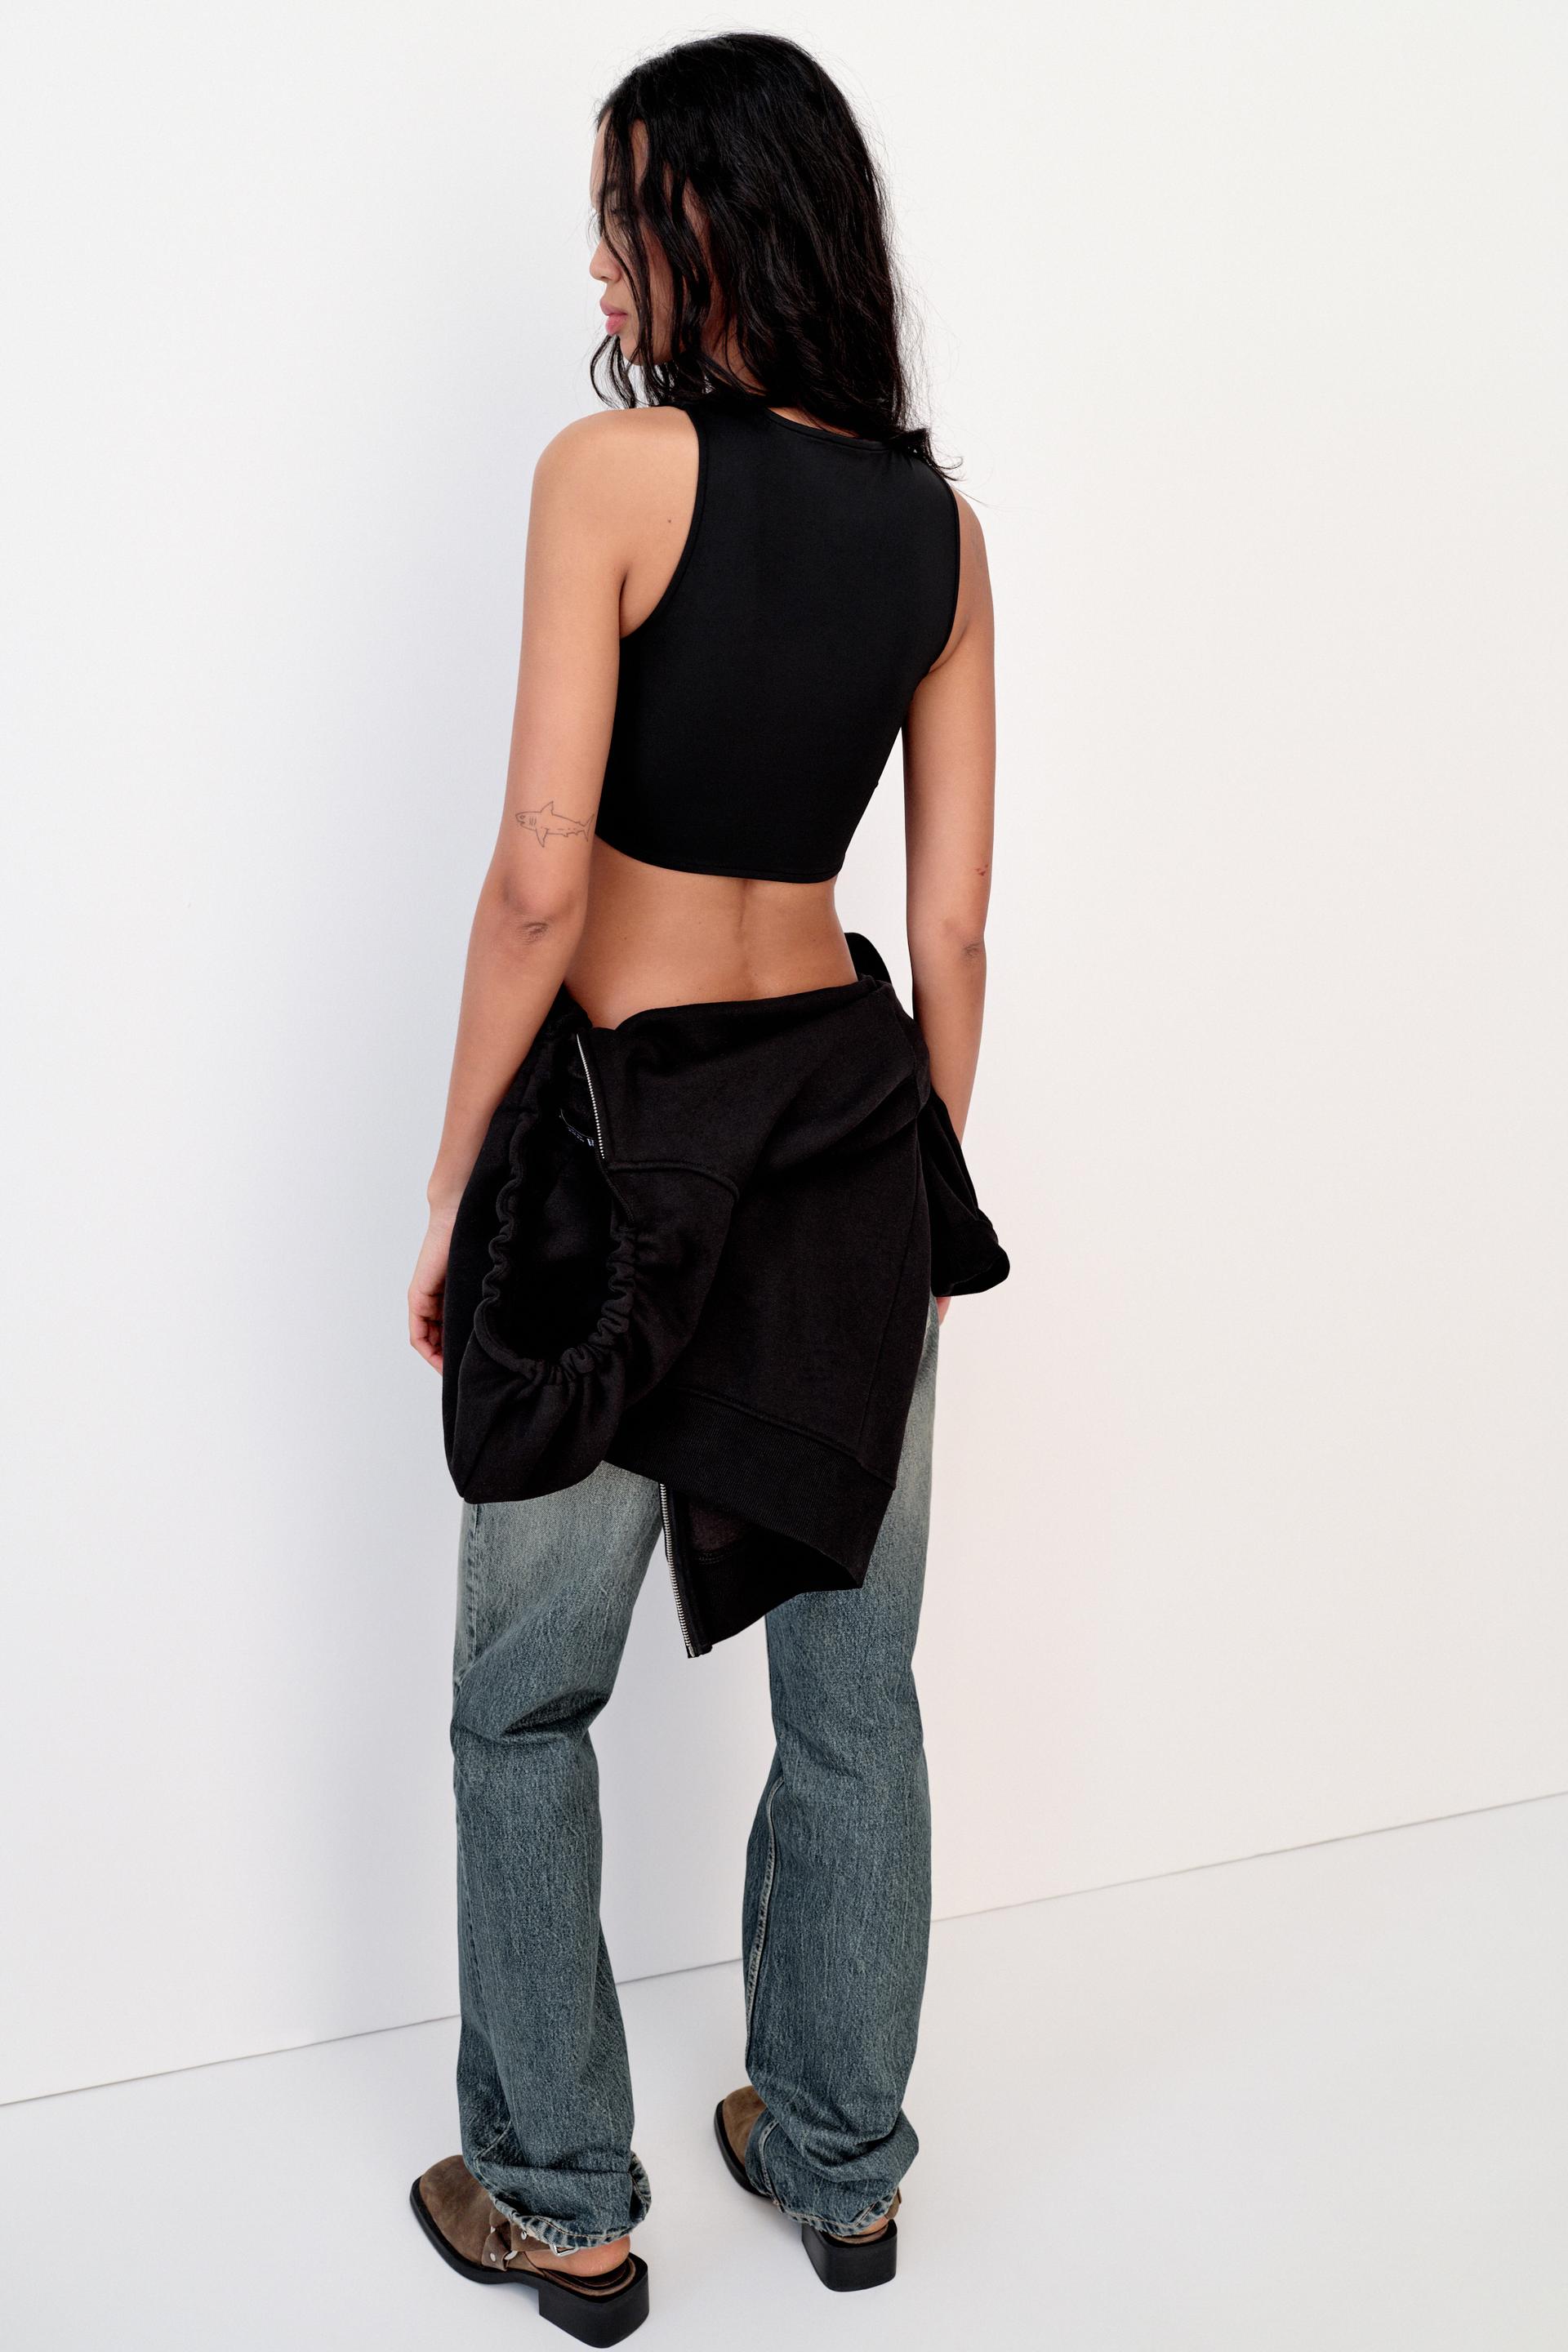 Zara Satin Crop Top - Black, Women's Fashion, Tops, Others Tops on